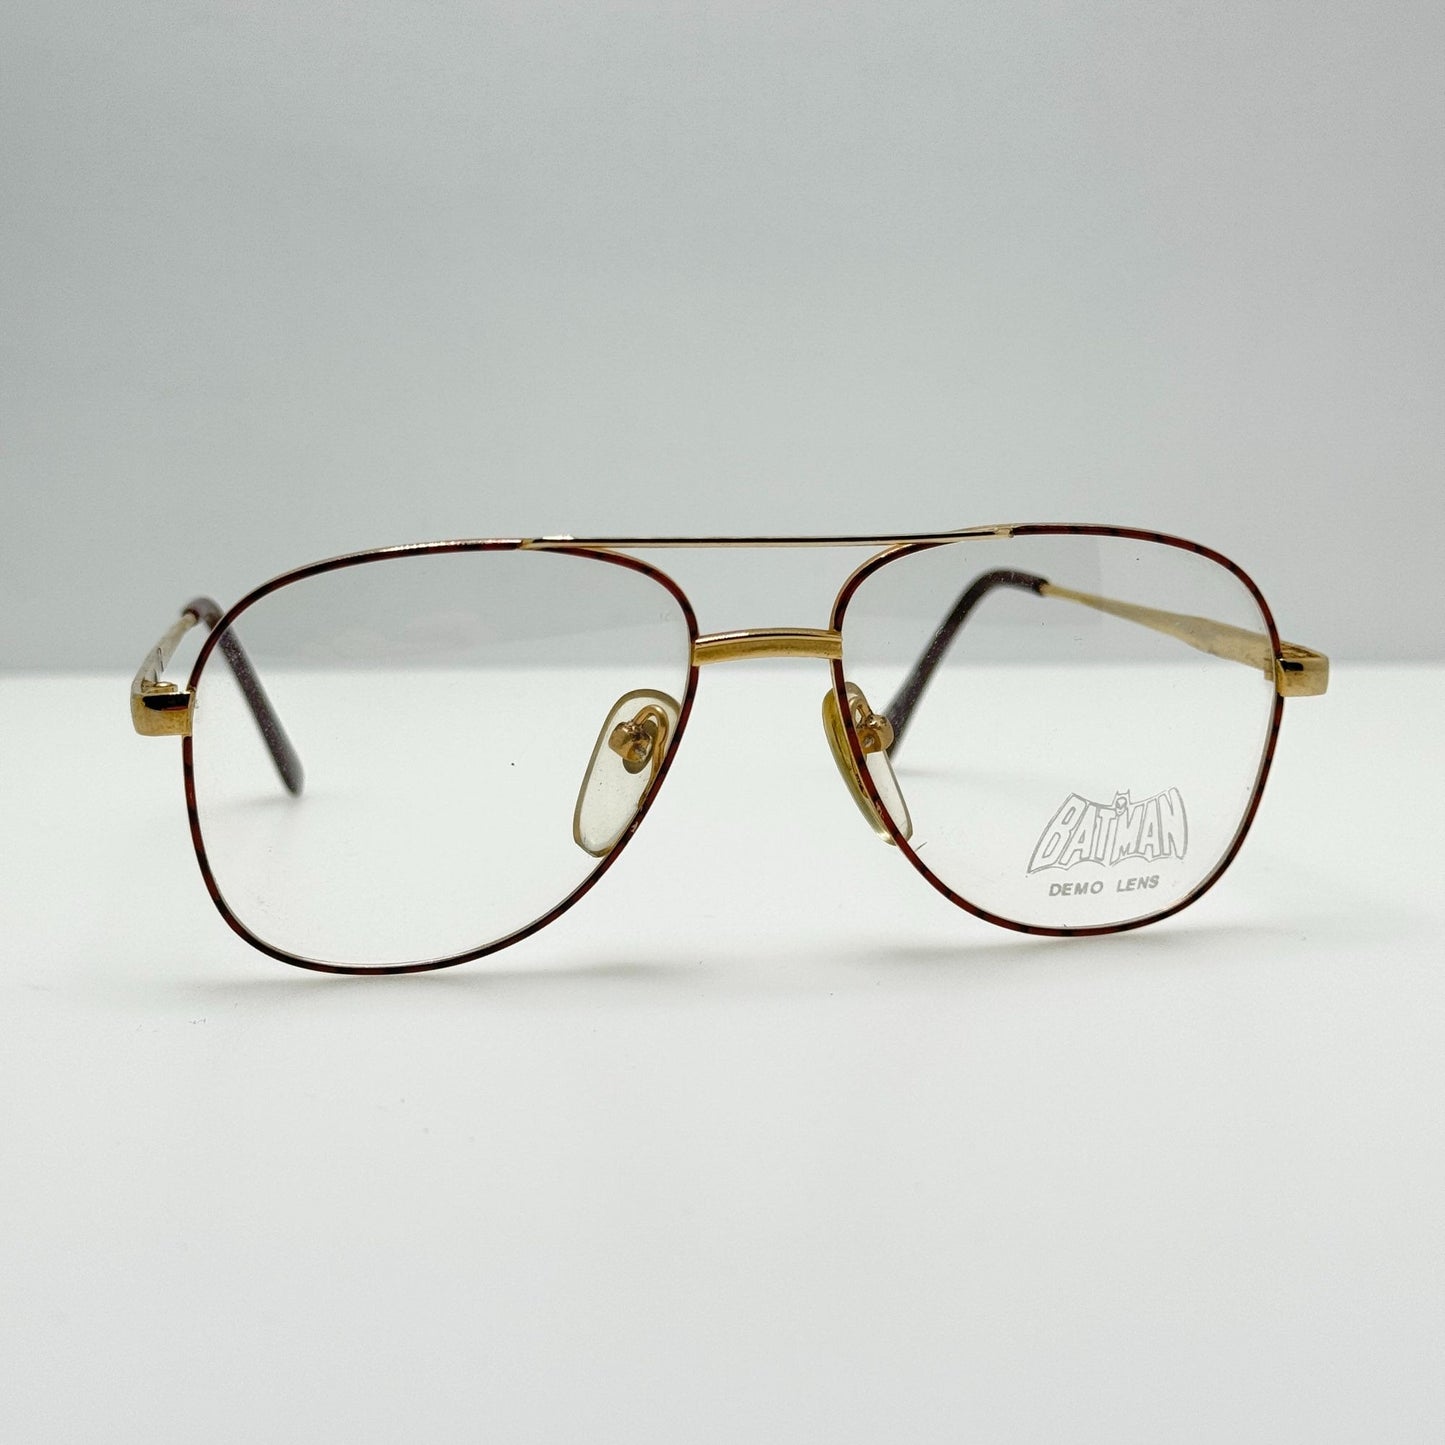 Batman Eyeglasses Eye Glasses Frames 4M Gold Brown 51-20-135 Mbl Kids Youth